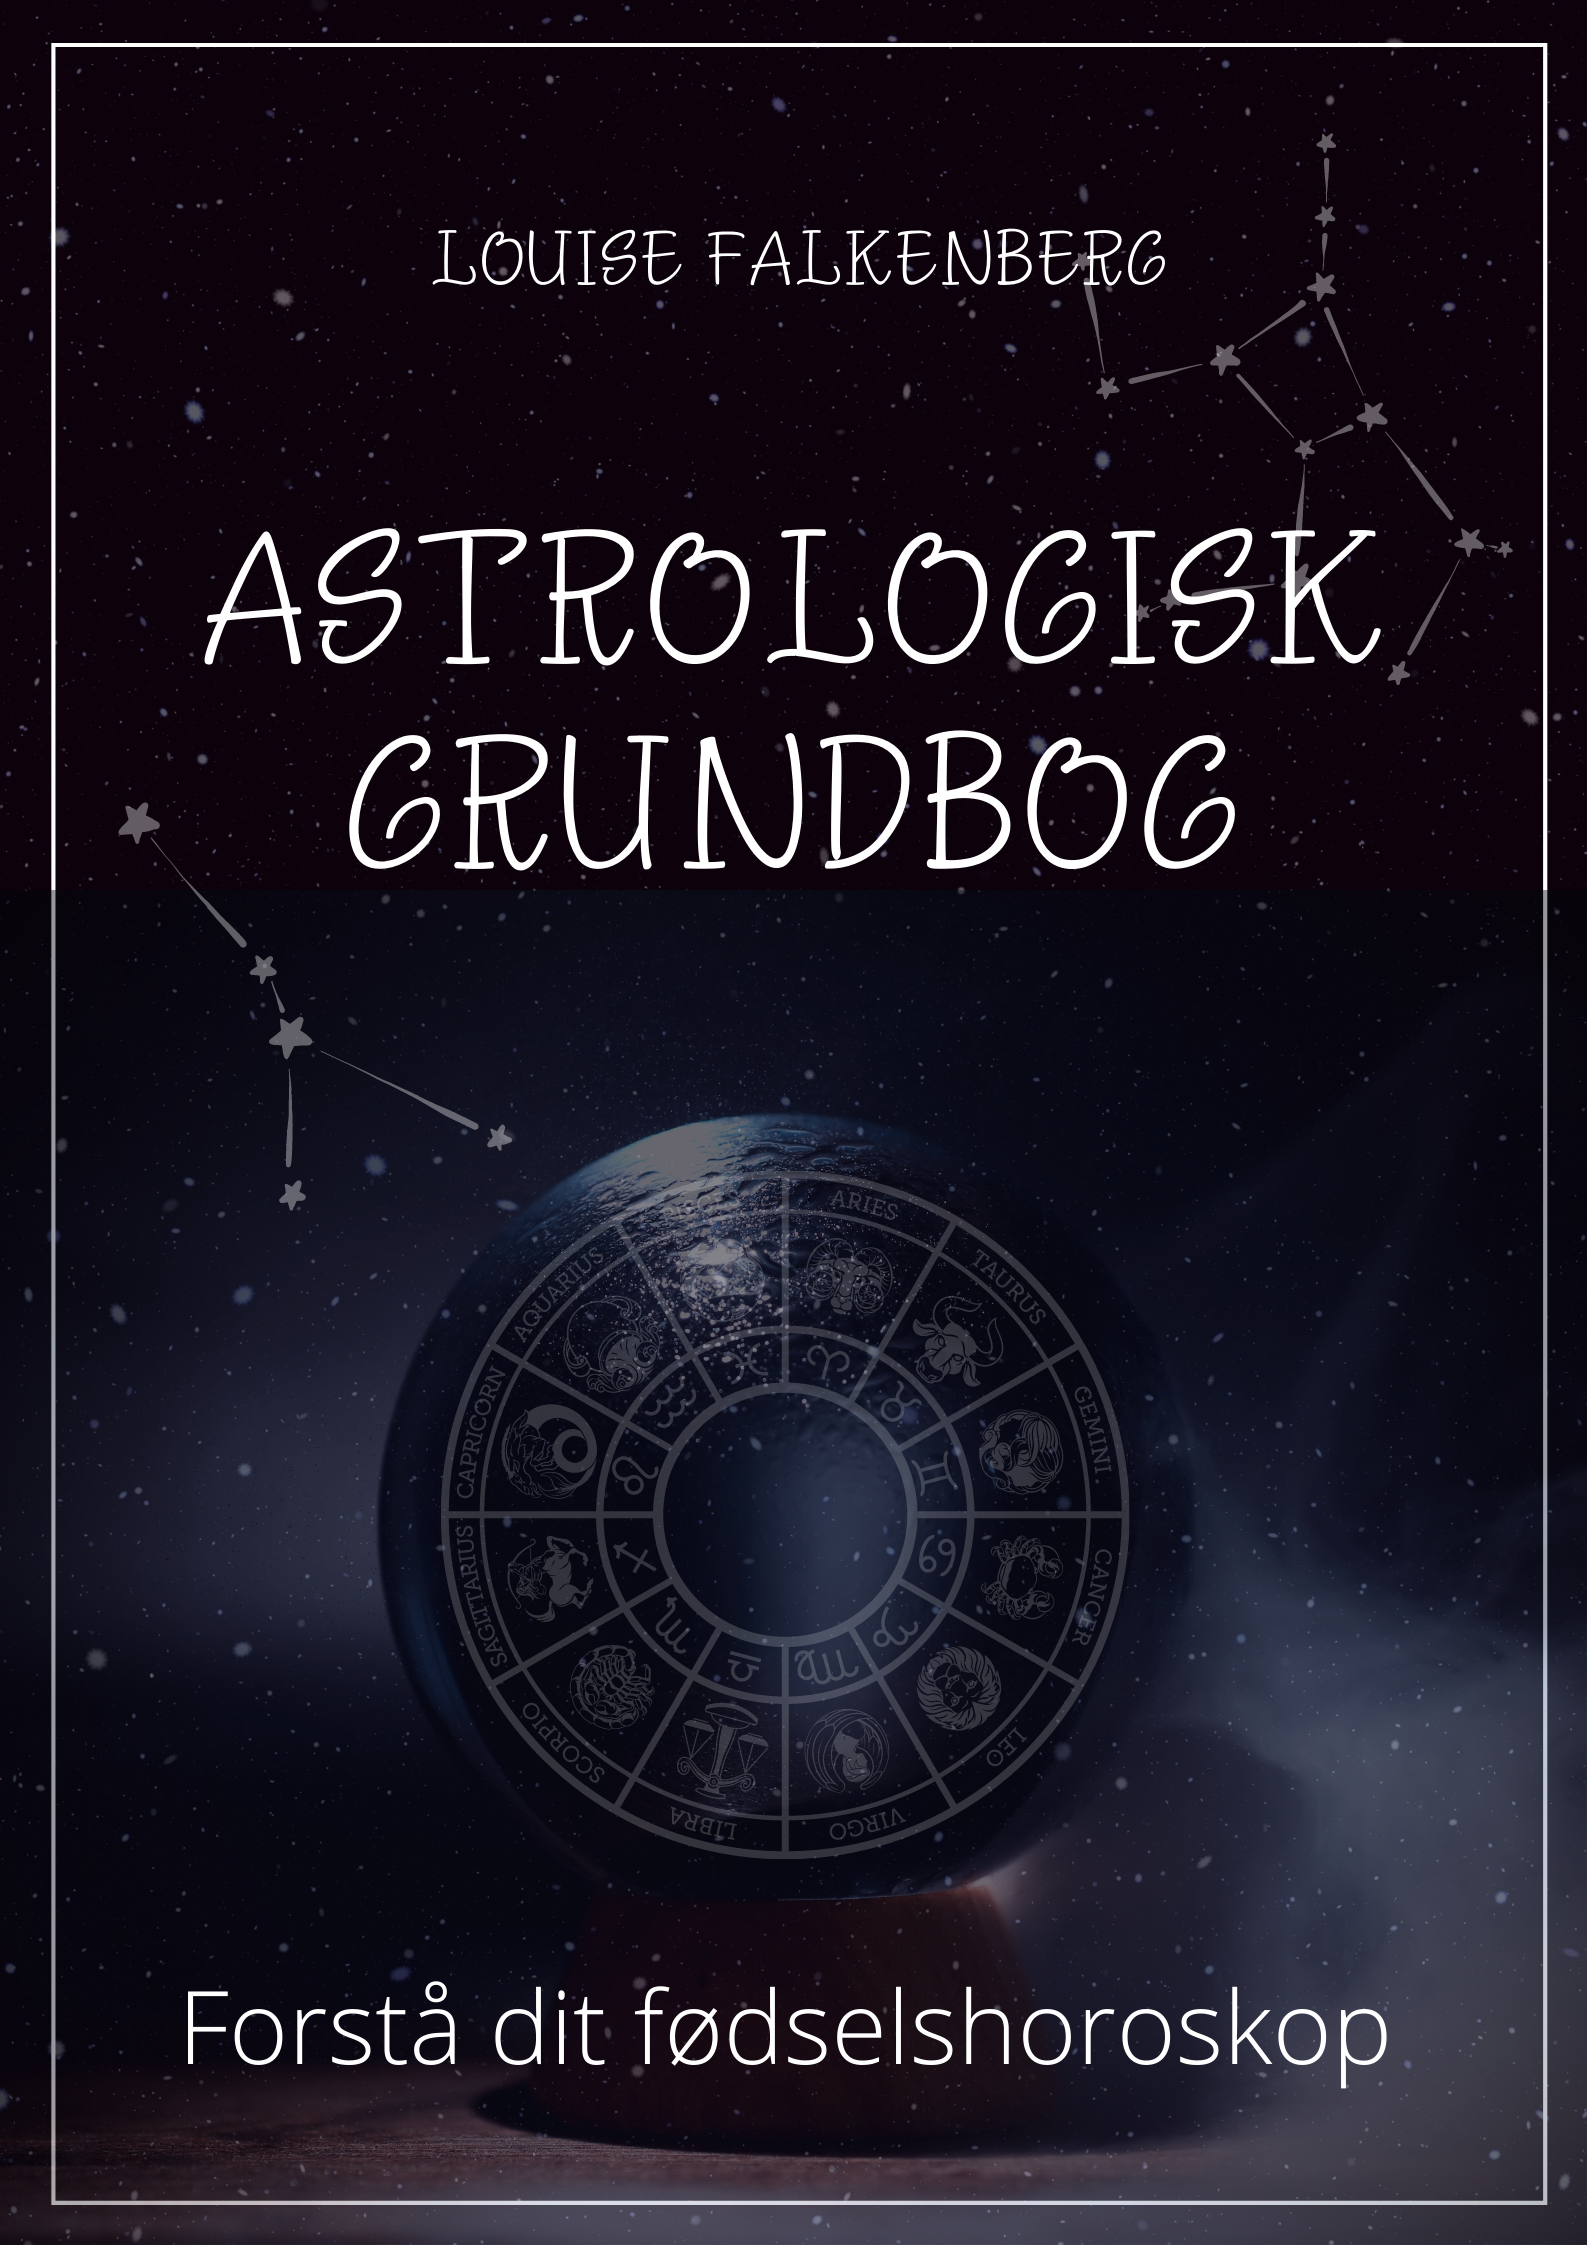 Mysterious Astrology Future Teller Halloween Musical Poster (2)